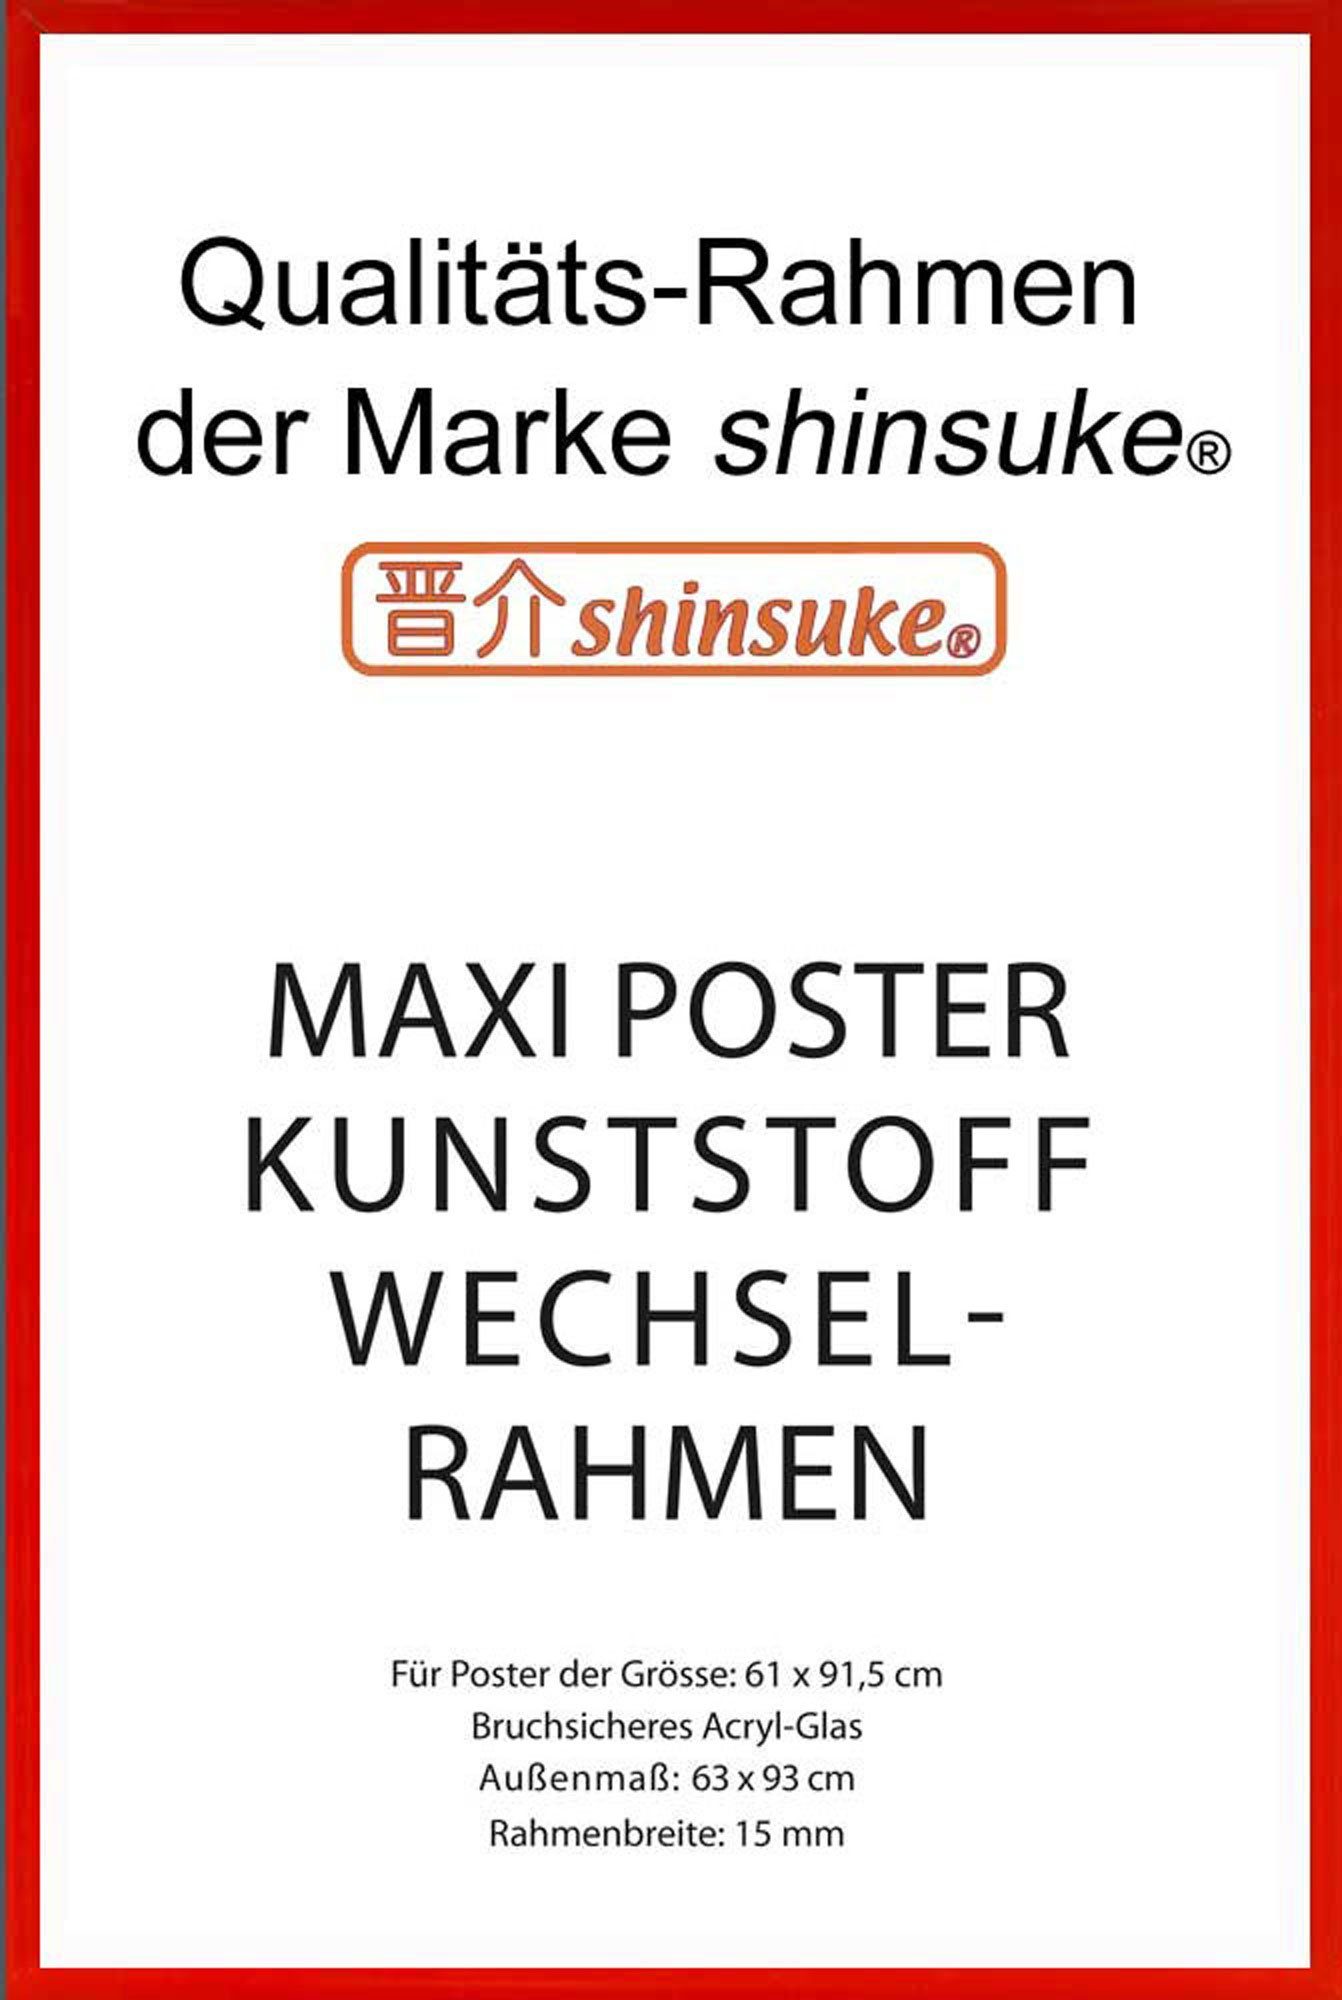 empireposter Rahmen Posterrahmen Wechselrahmen Shinsuke® Maxi-Poster Profil: 15mm Kunststoff 61x91,5cm, Farbe rot mit Acryl-Scheibe